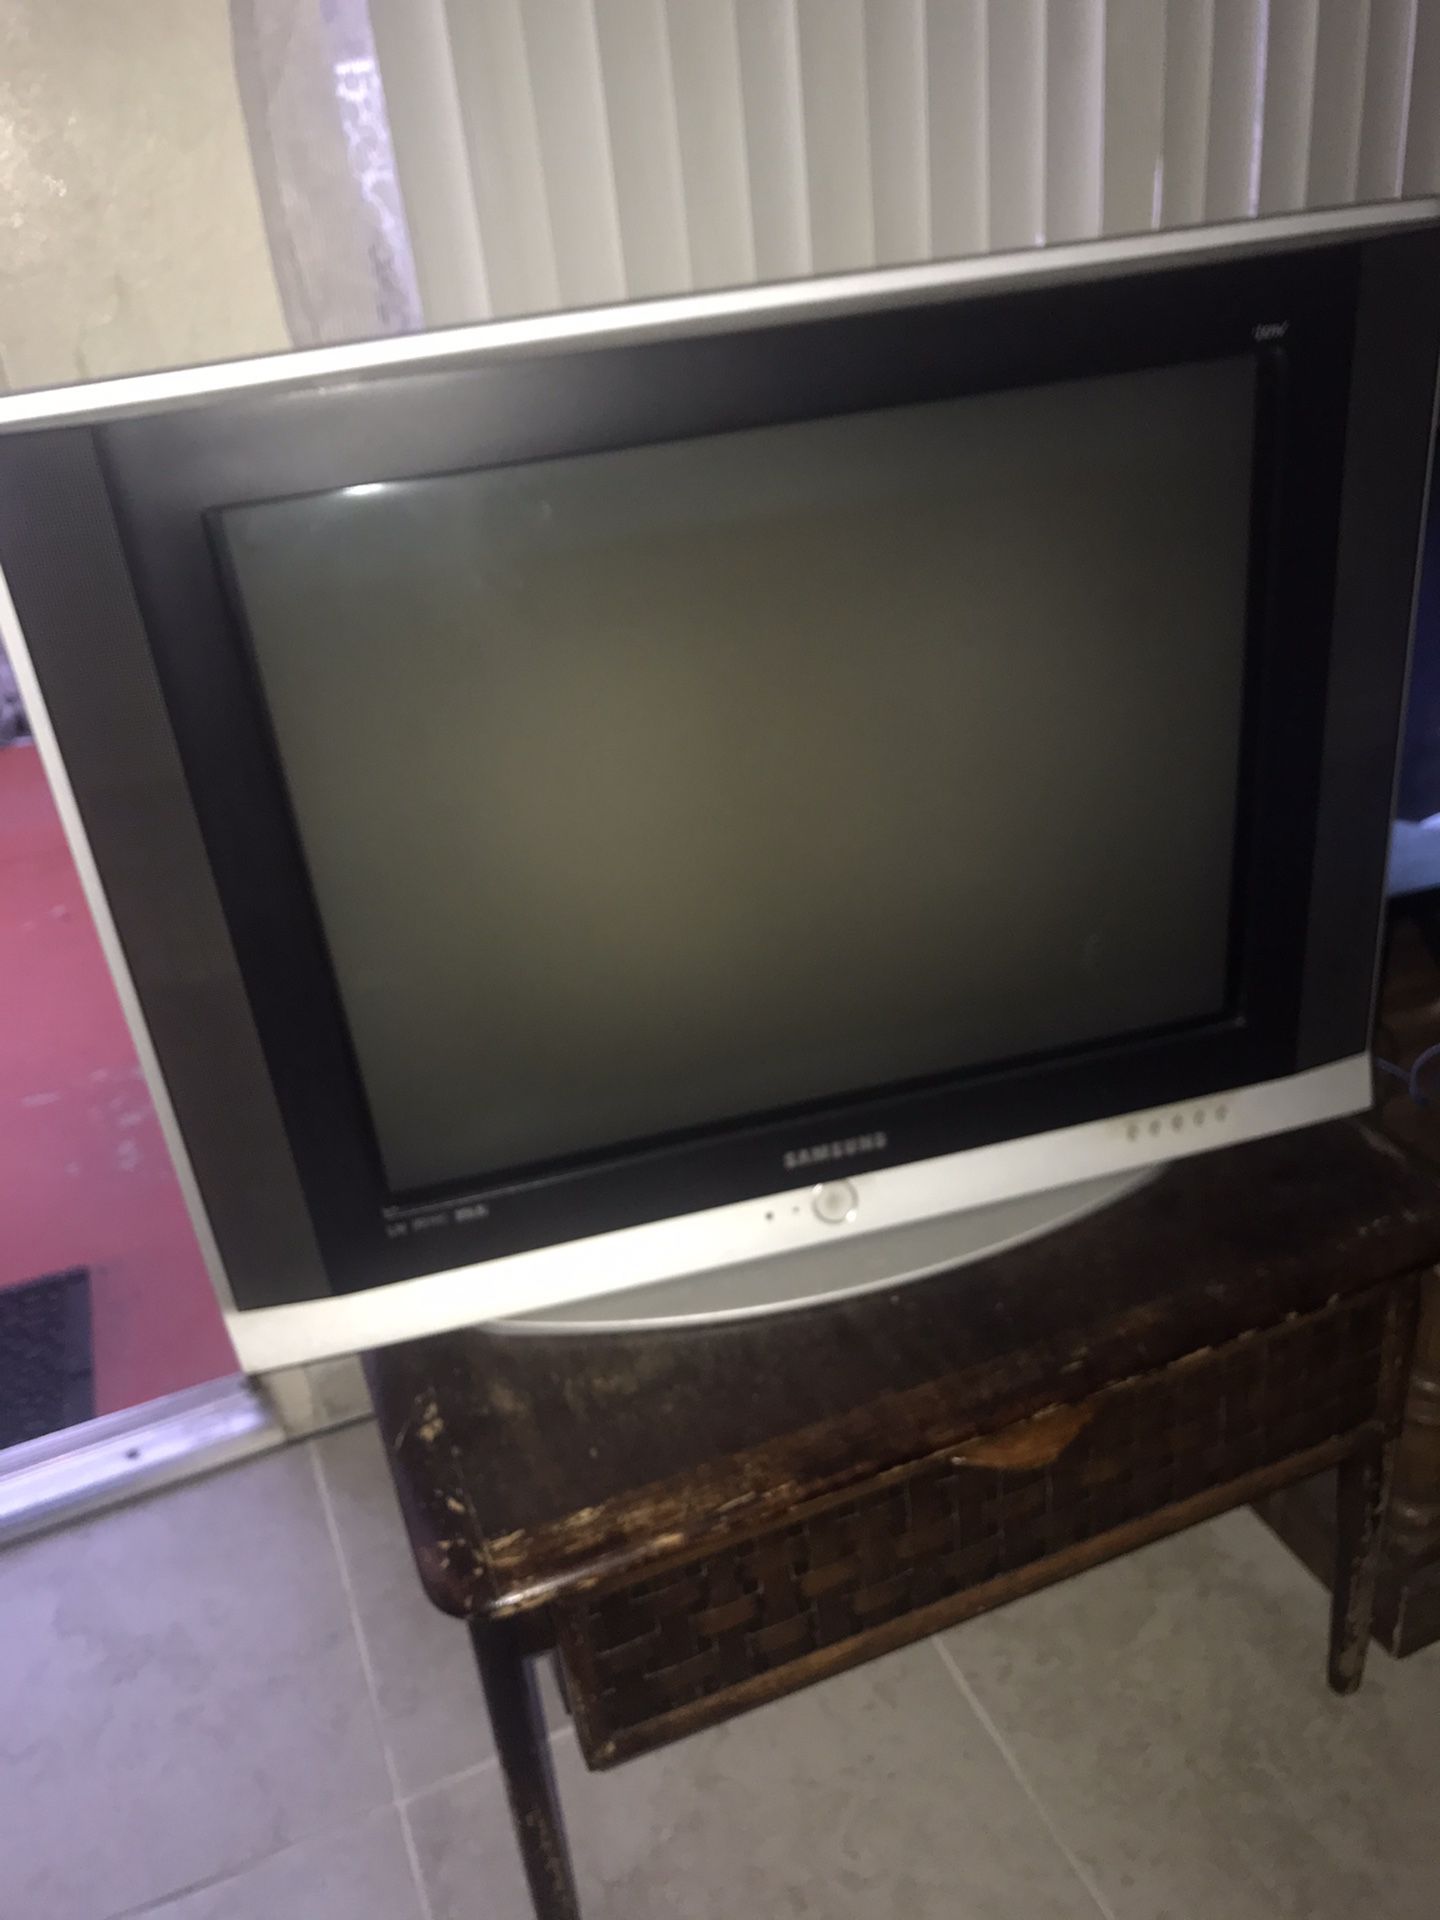 Free Samsung TV Old School Box